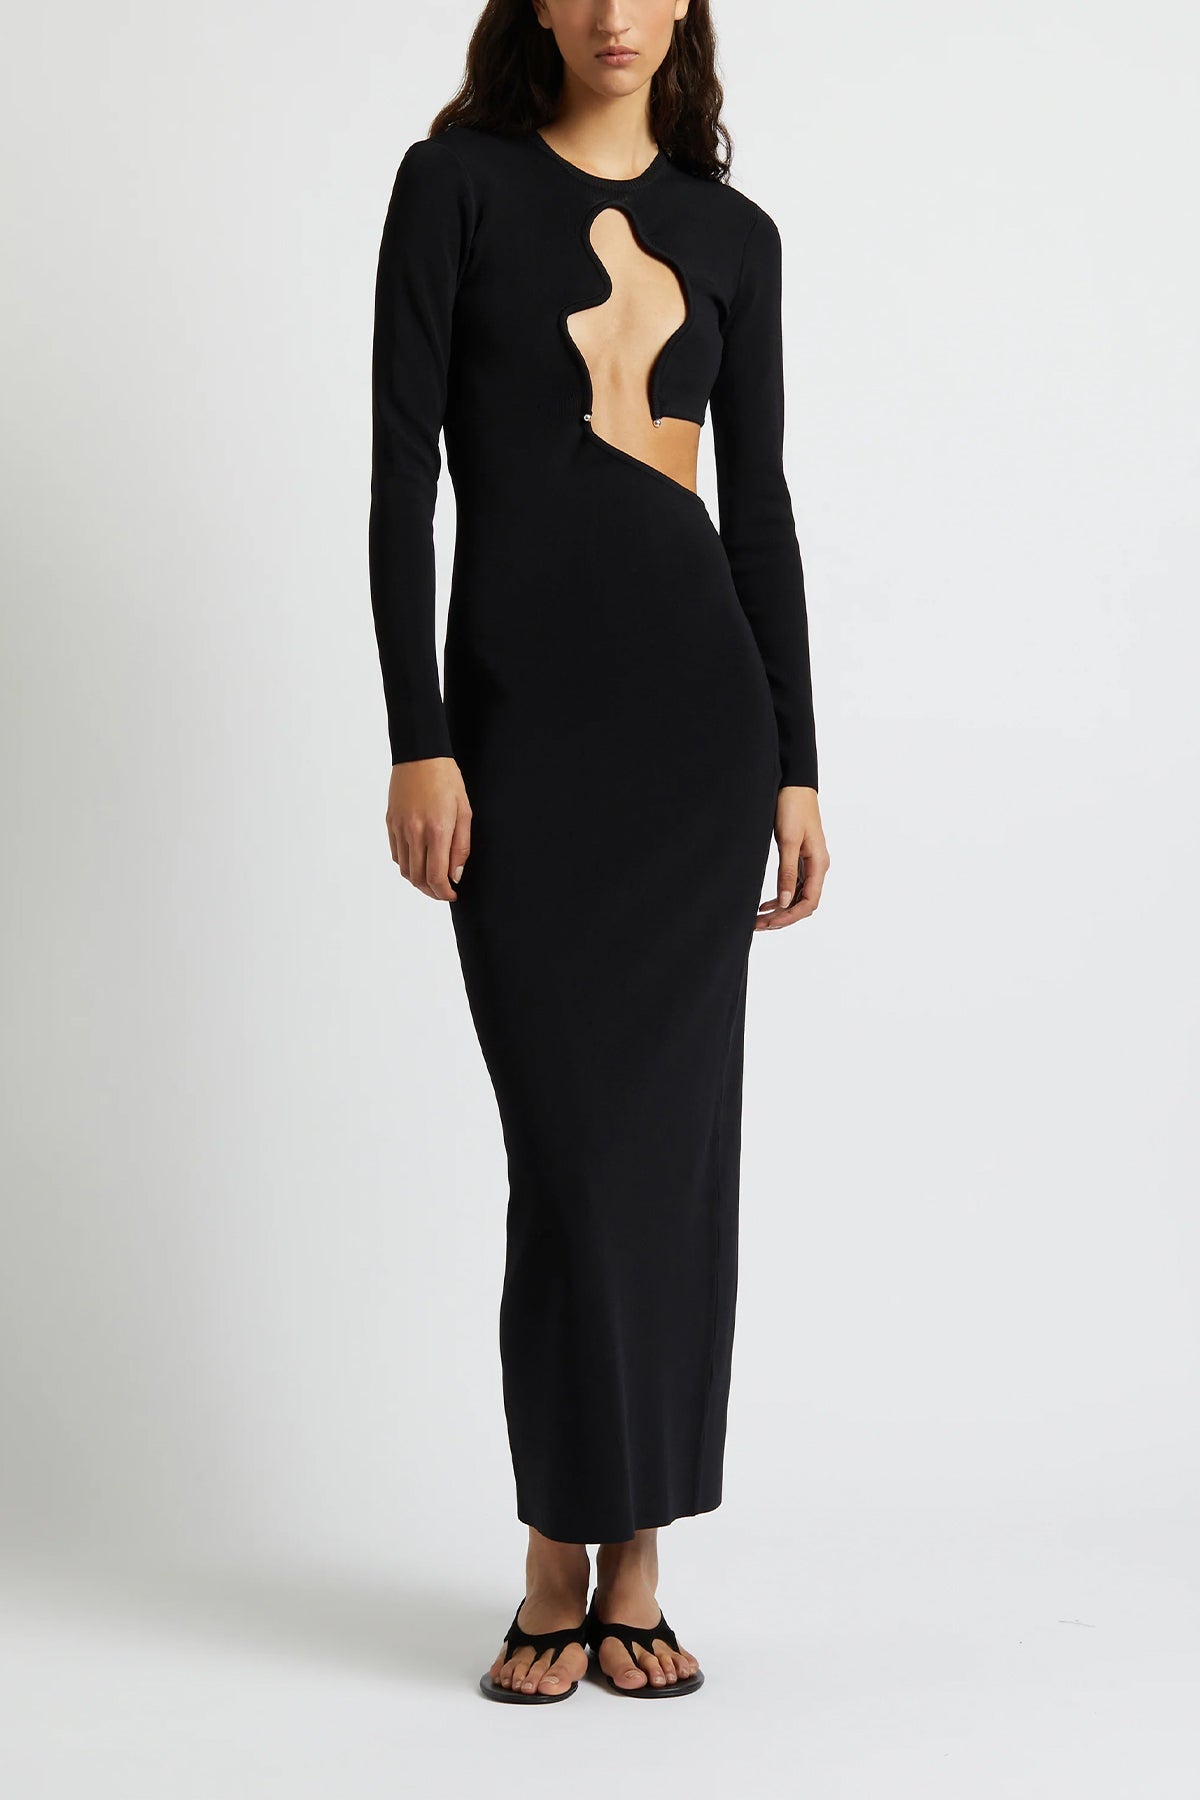 Salacia Wire Long Sleeve Column Dress in Black - shop-olivia.com